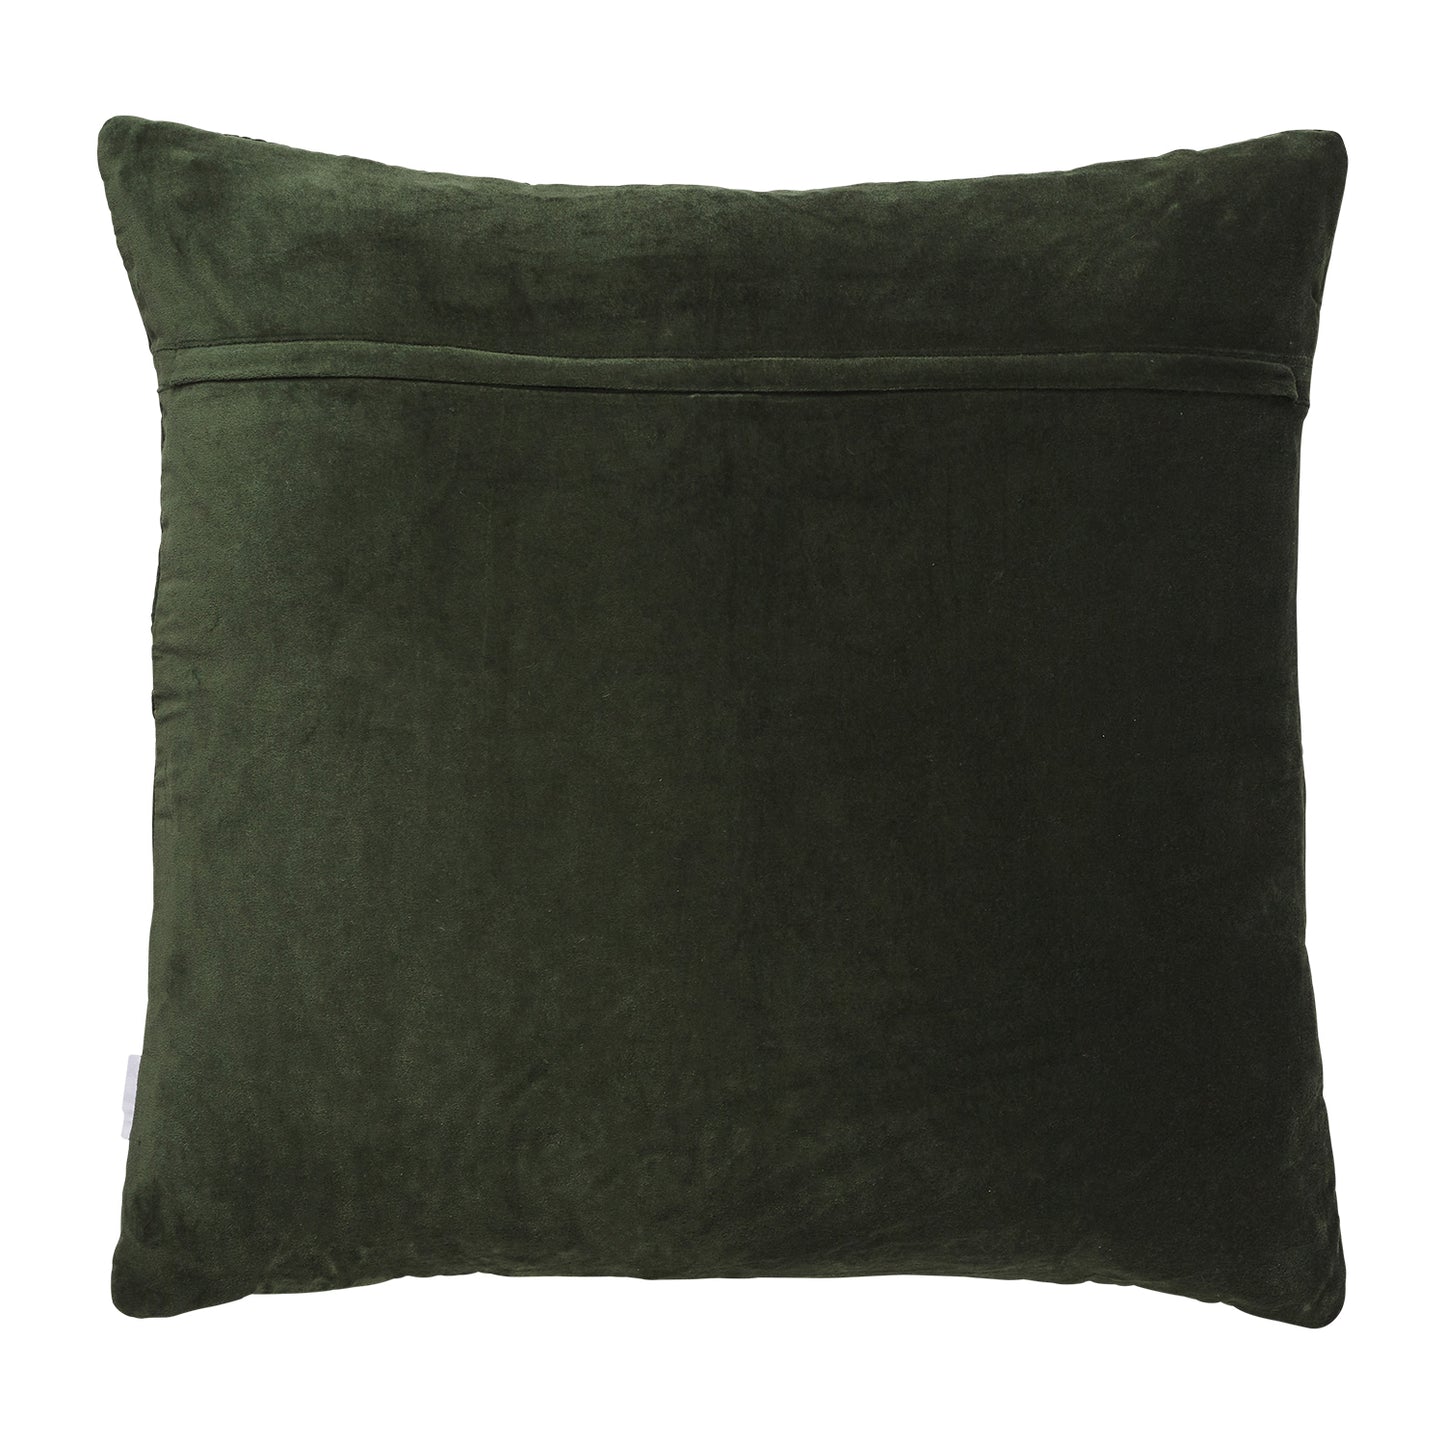 Sage x Clare - Surrey cushion cover 65cm x 65cm